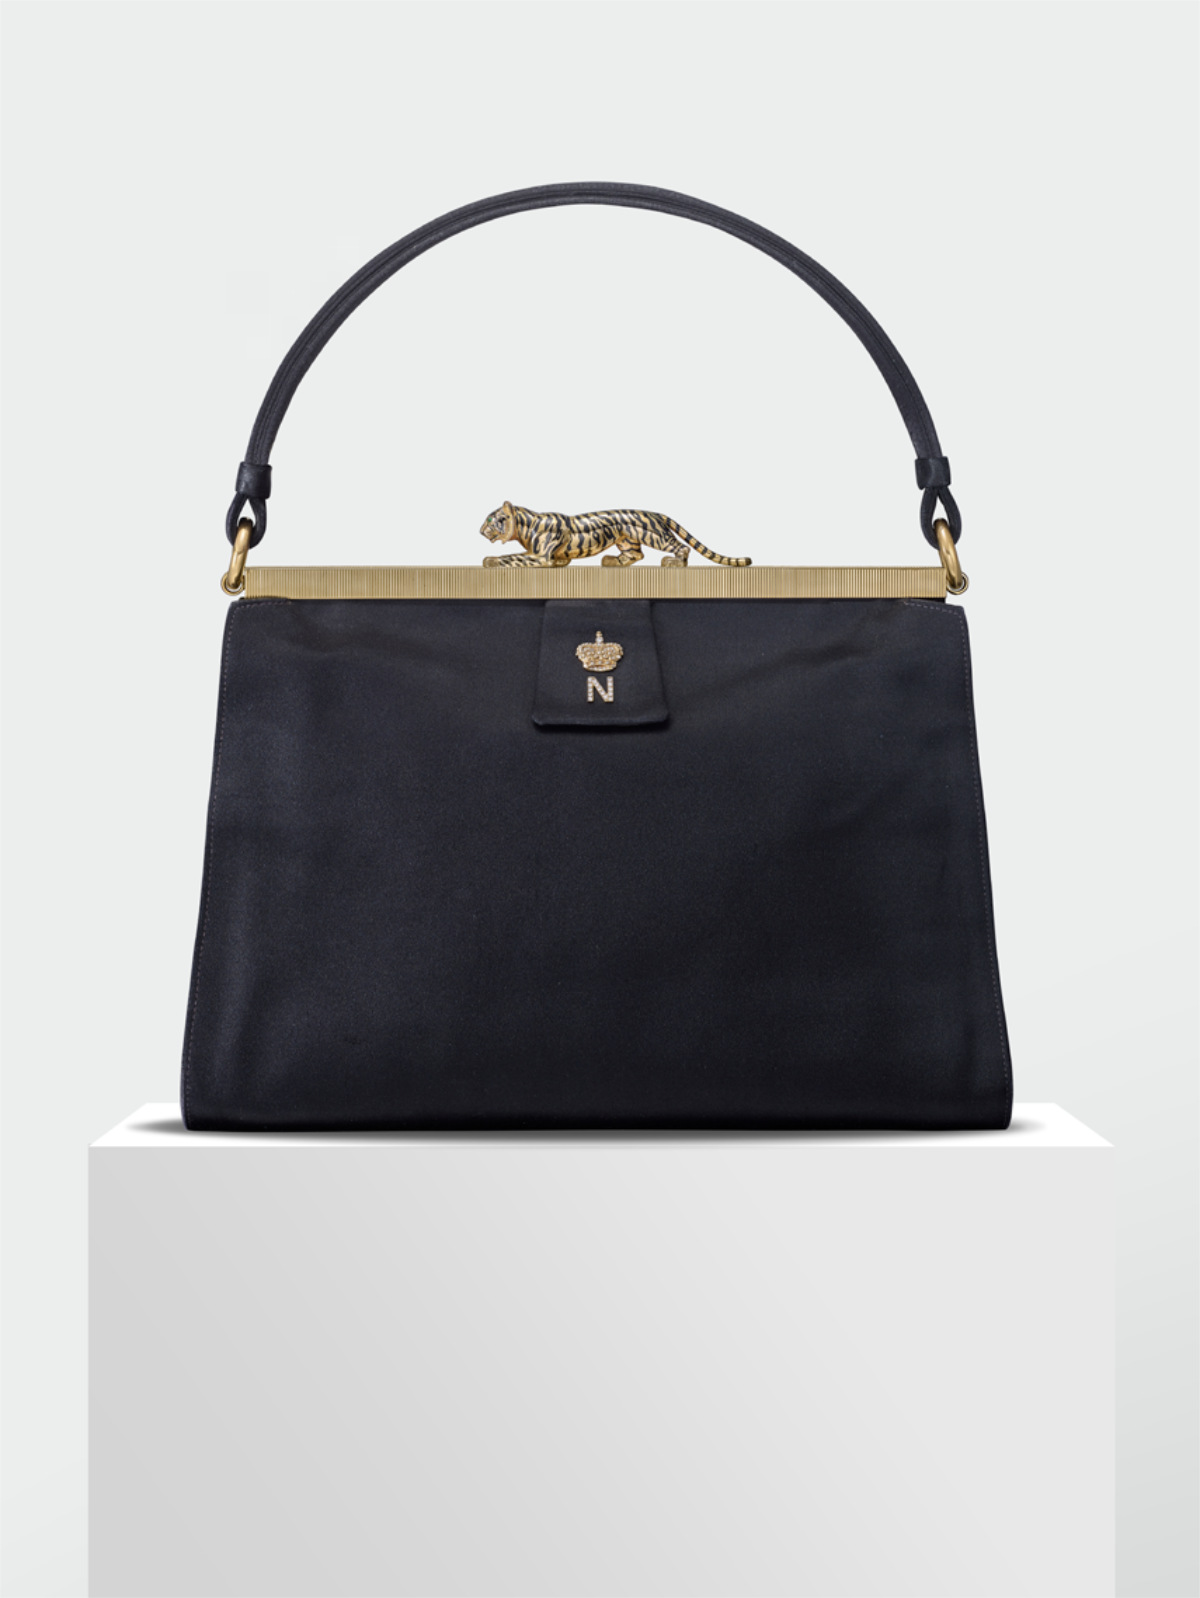 Cartier Presents Its New Panthère Handbag